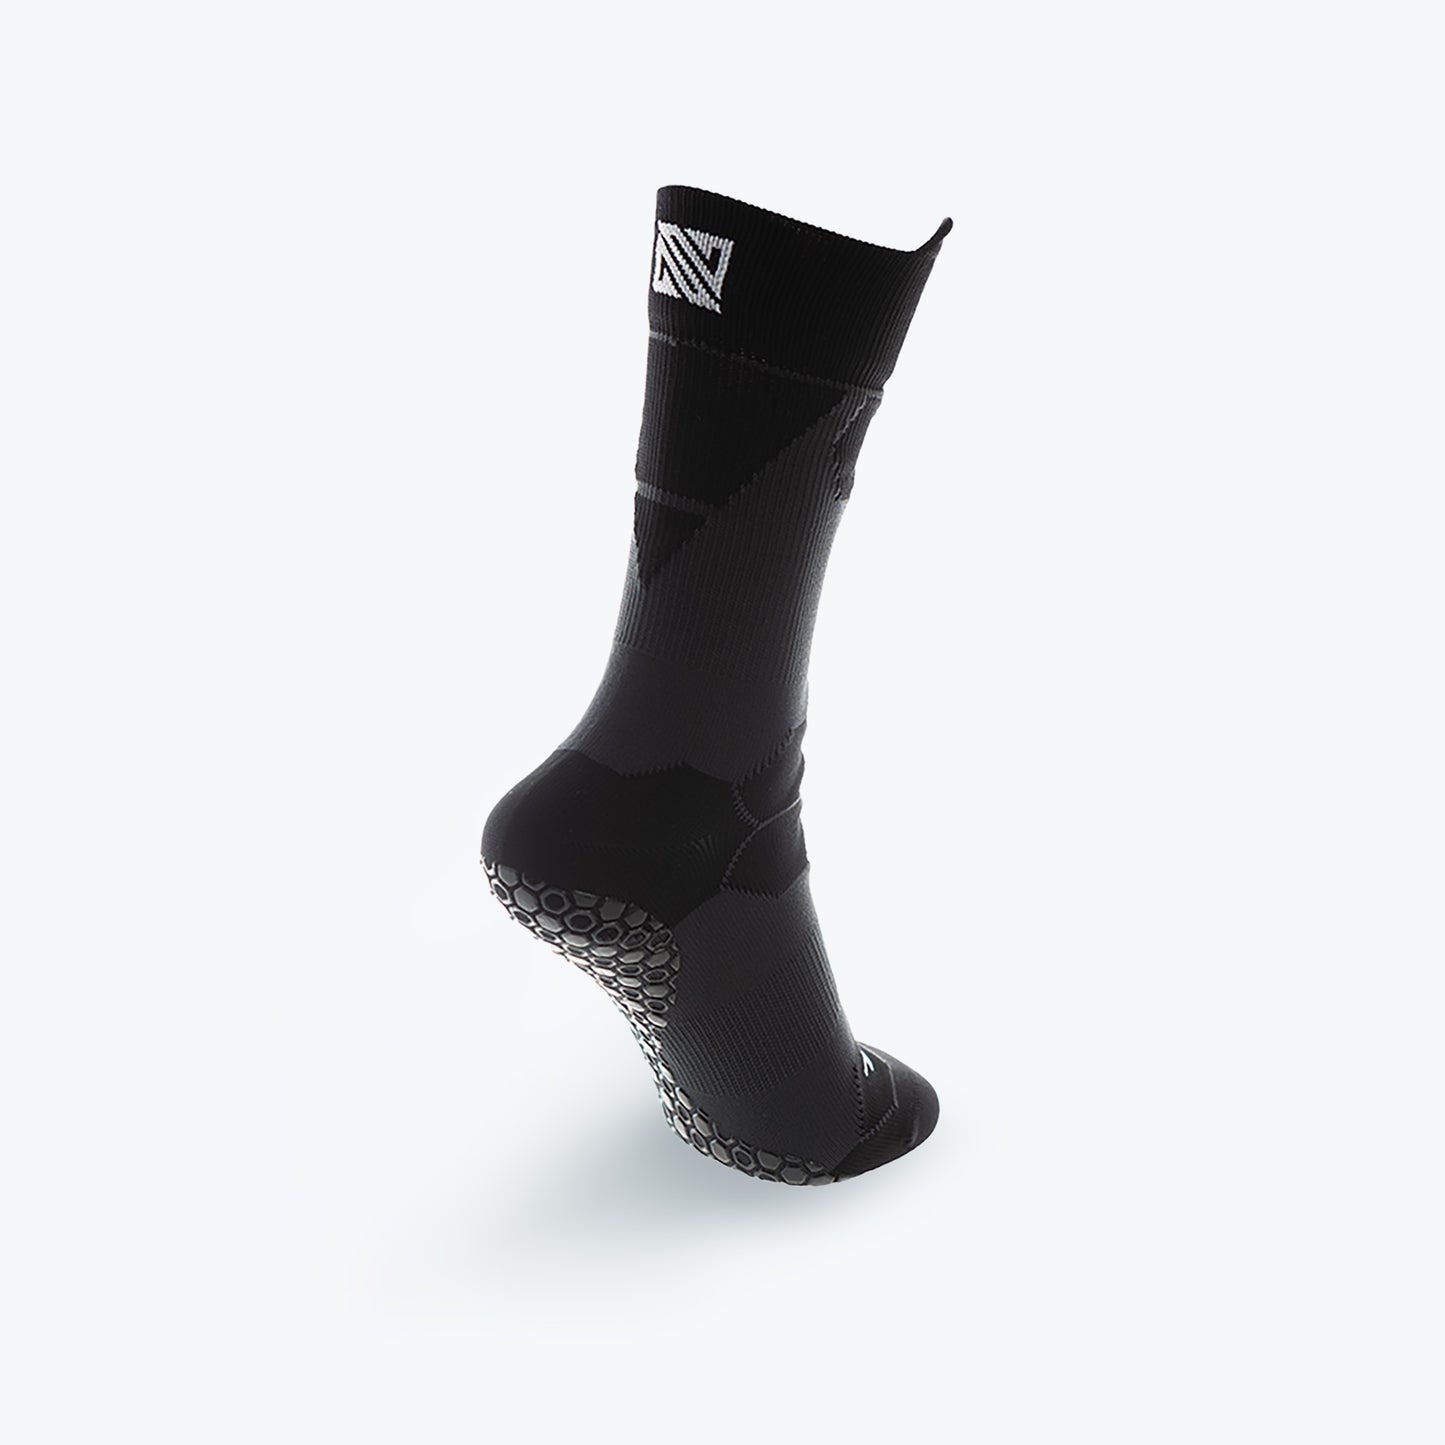 GripSoxx - Grip Socken in Black